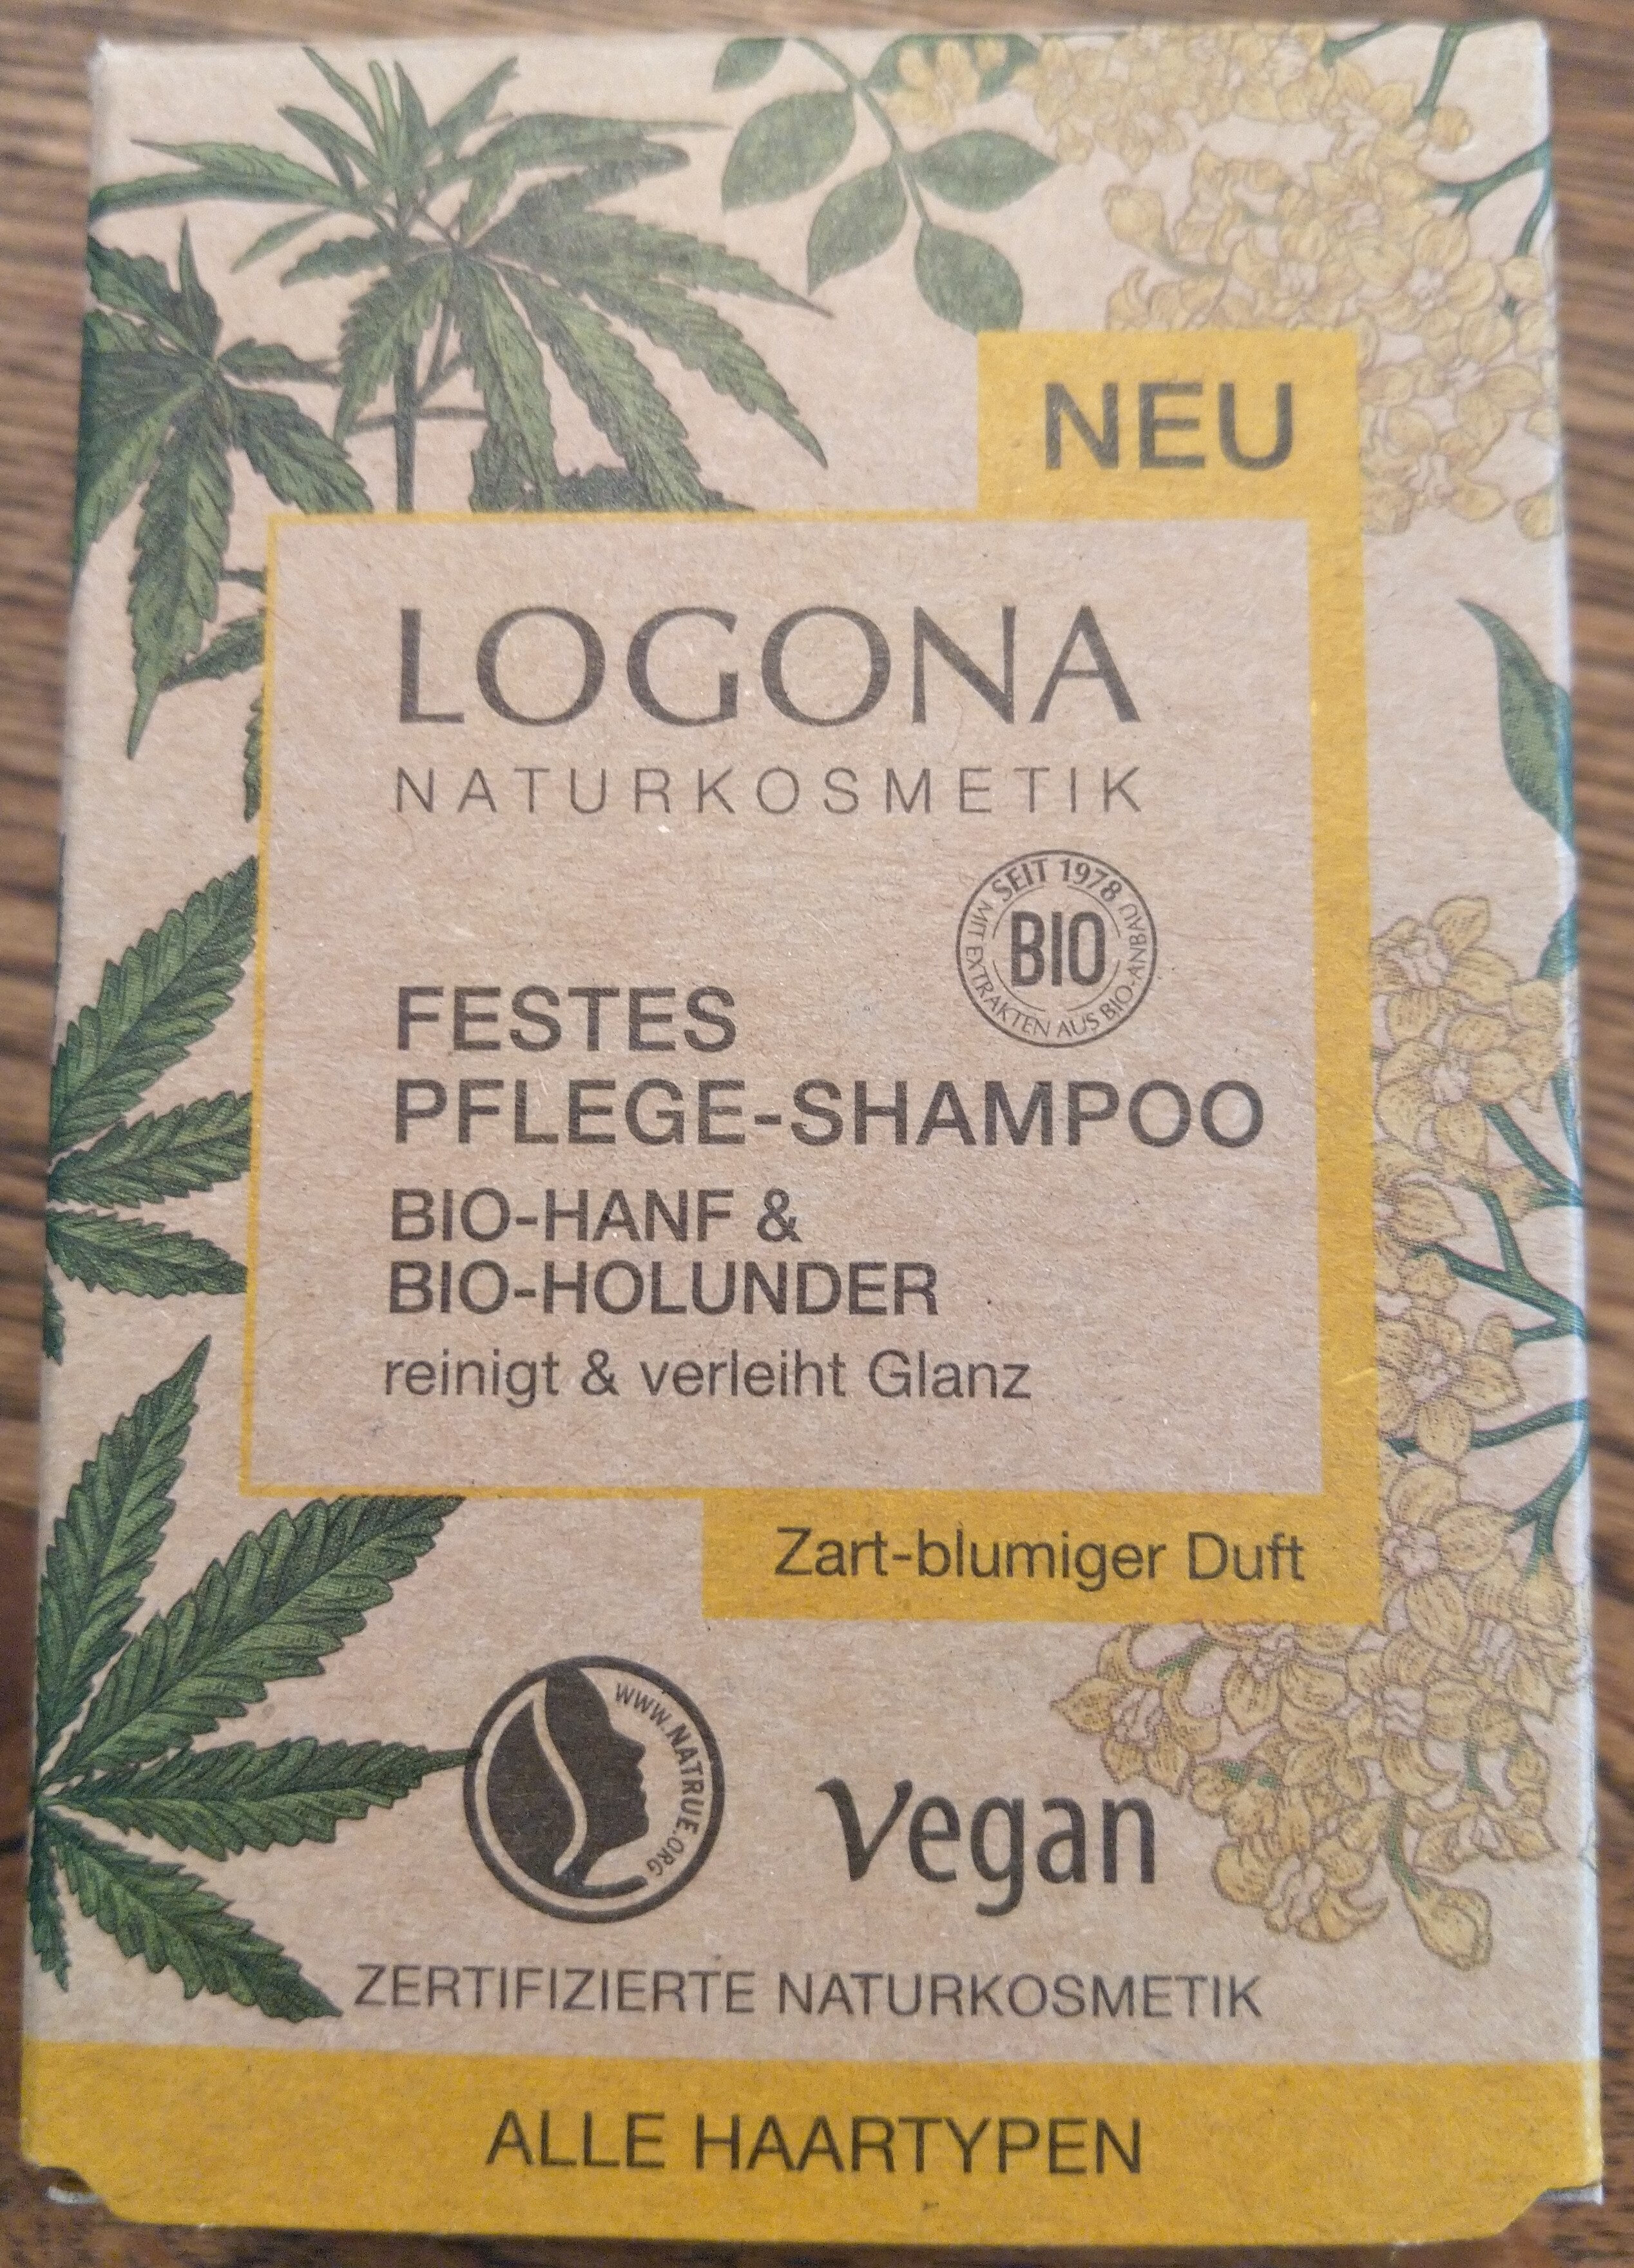 Festes Pflege-Shampoo Bio-Hanf & Bio-Holunder - Product - de